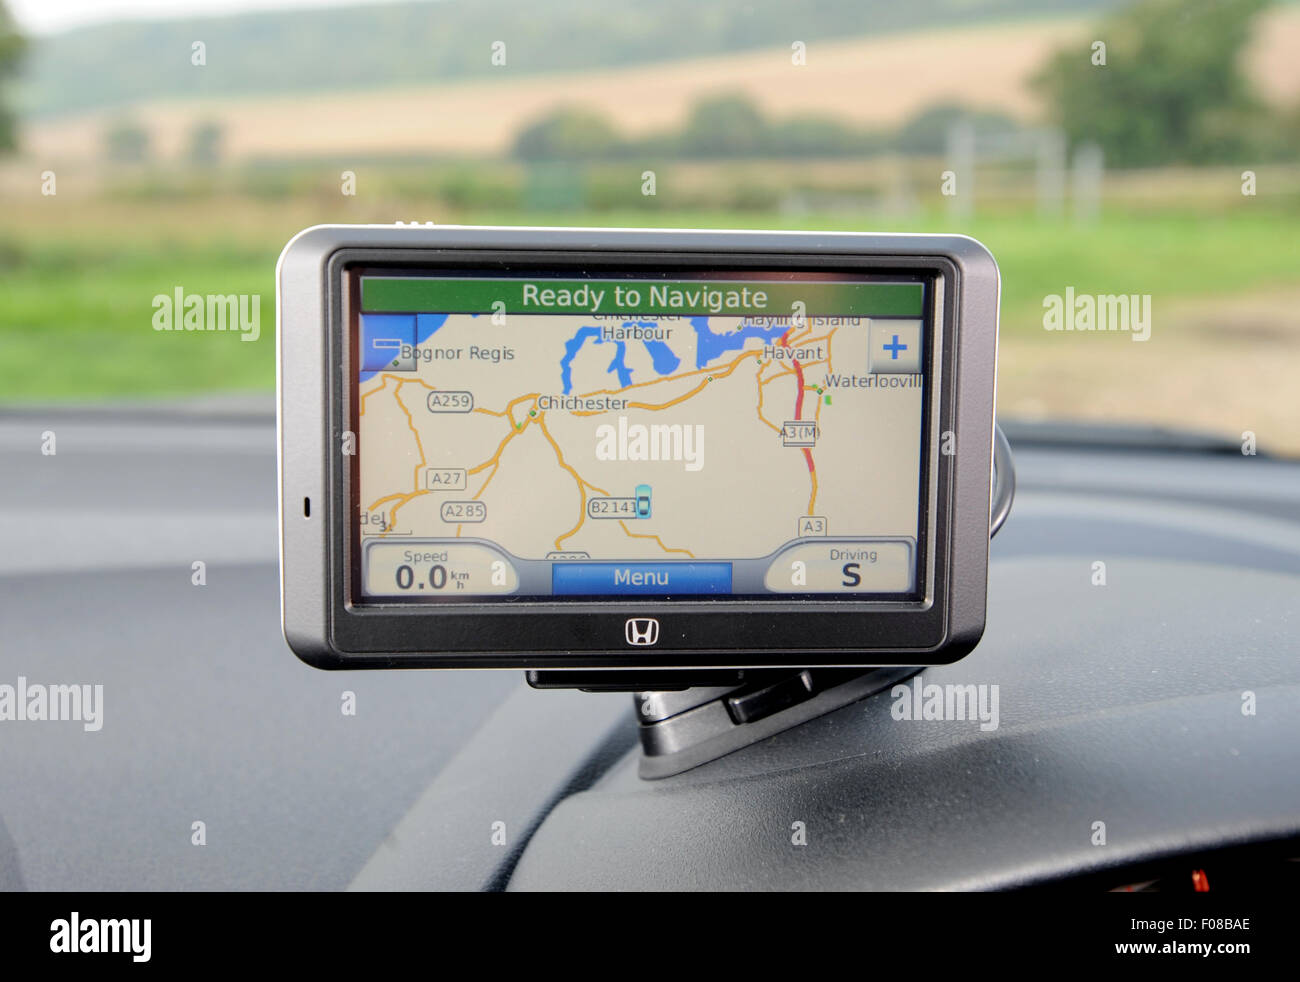 Dashboard Car Screen Road Sat Navigation Map Stock Photos ...